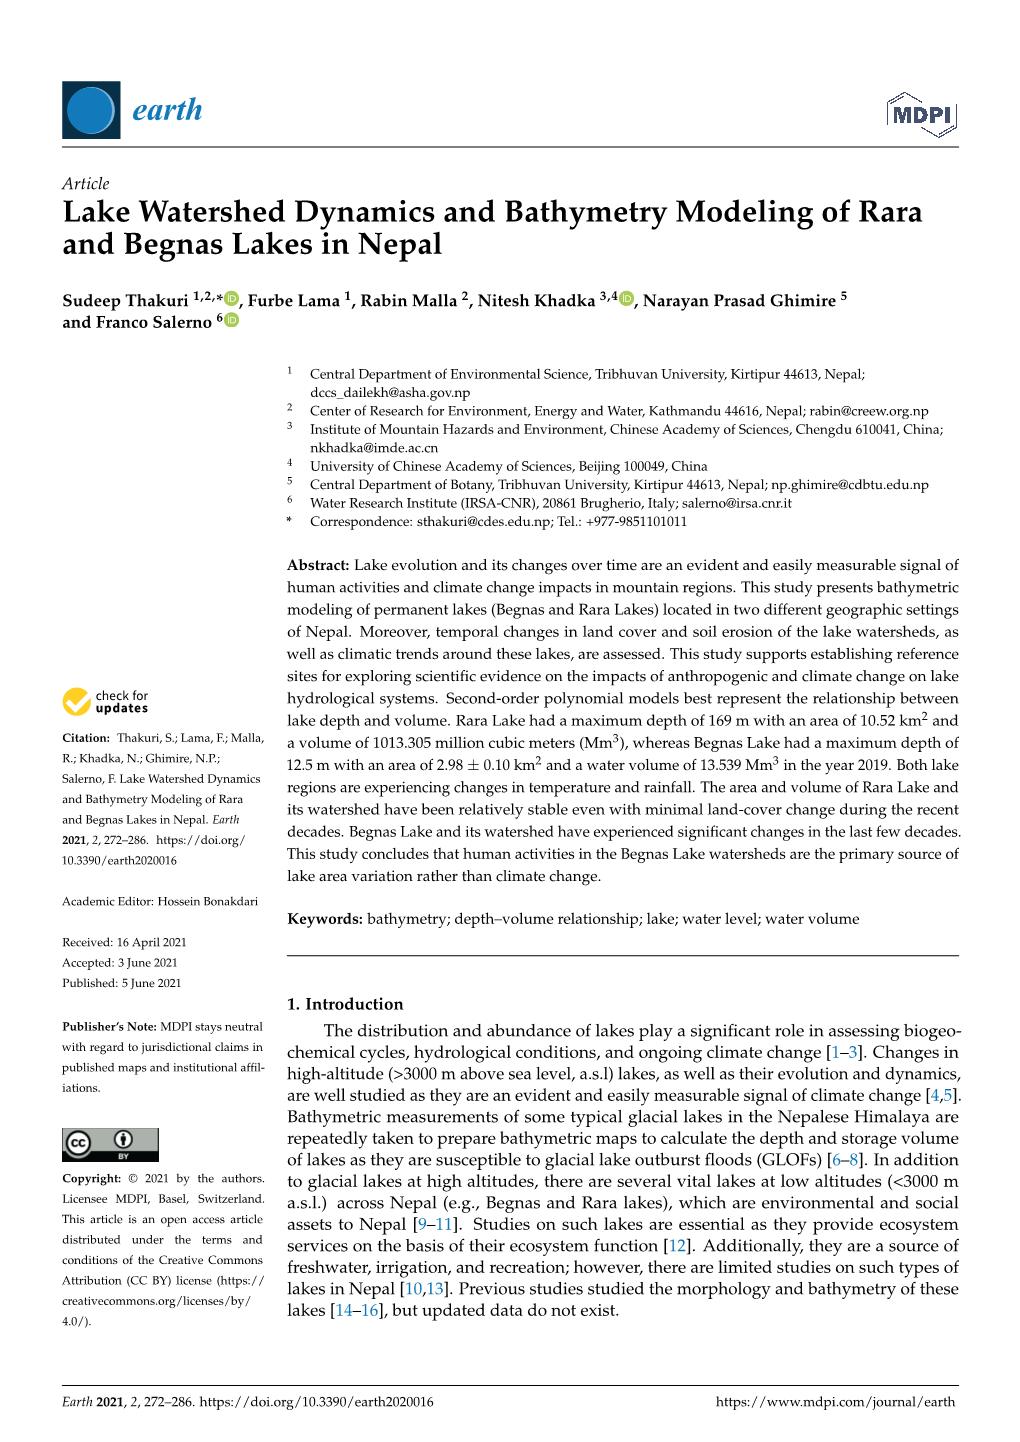 Lake Watershed Dynamics and Bathymetry Modeling of Rara and Begnas Lakes in Nepal